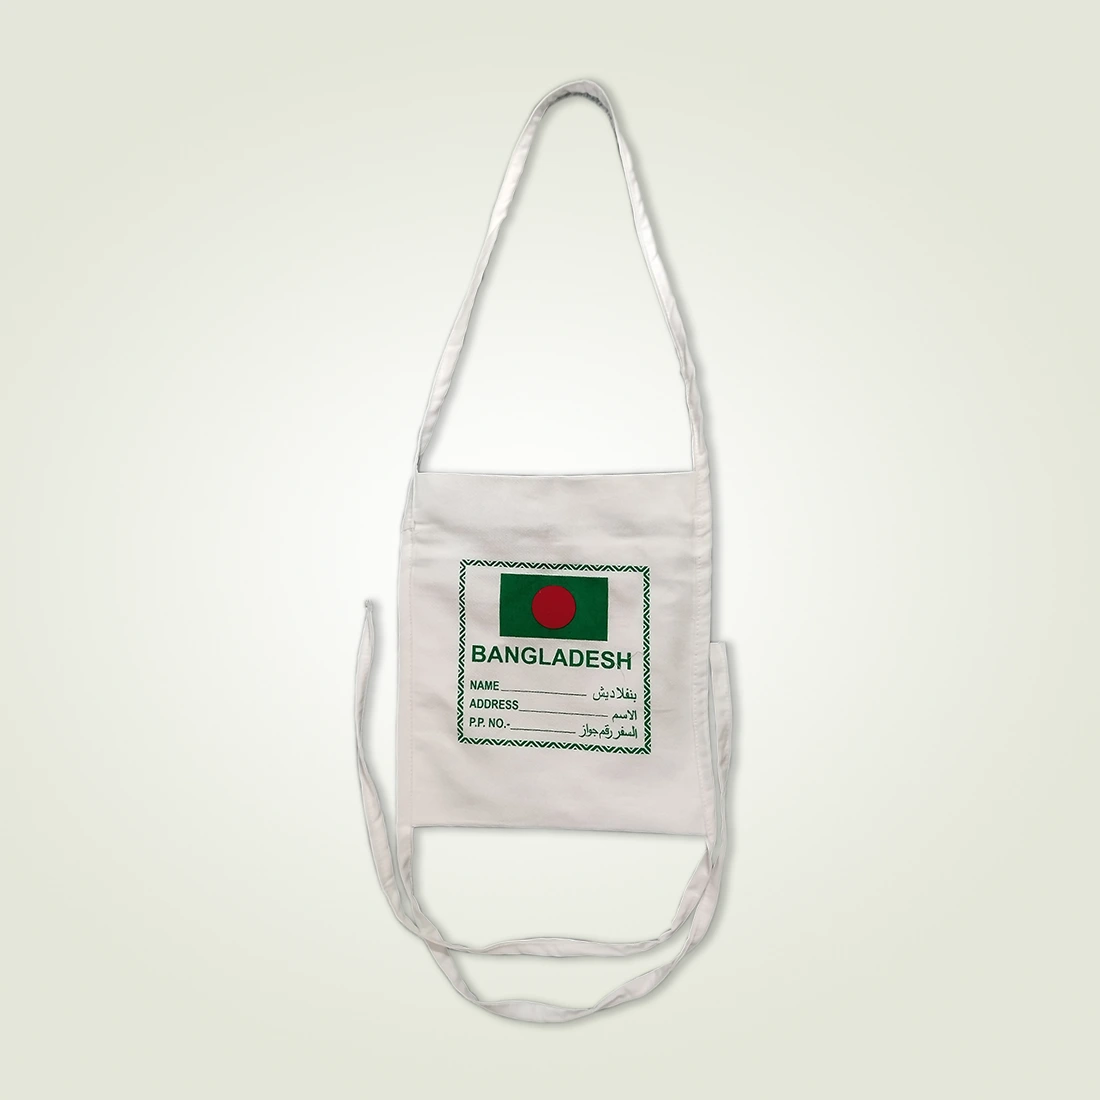 Small Neck Bag for Hajj and Umrah